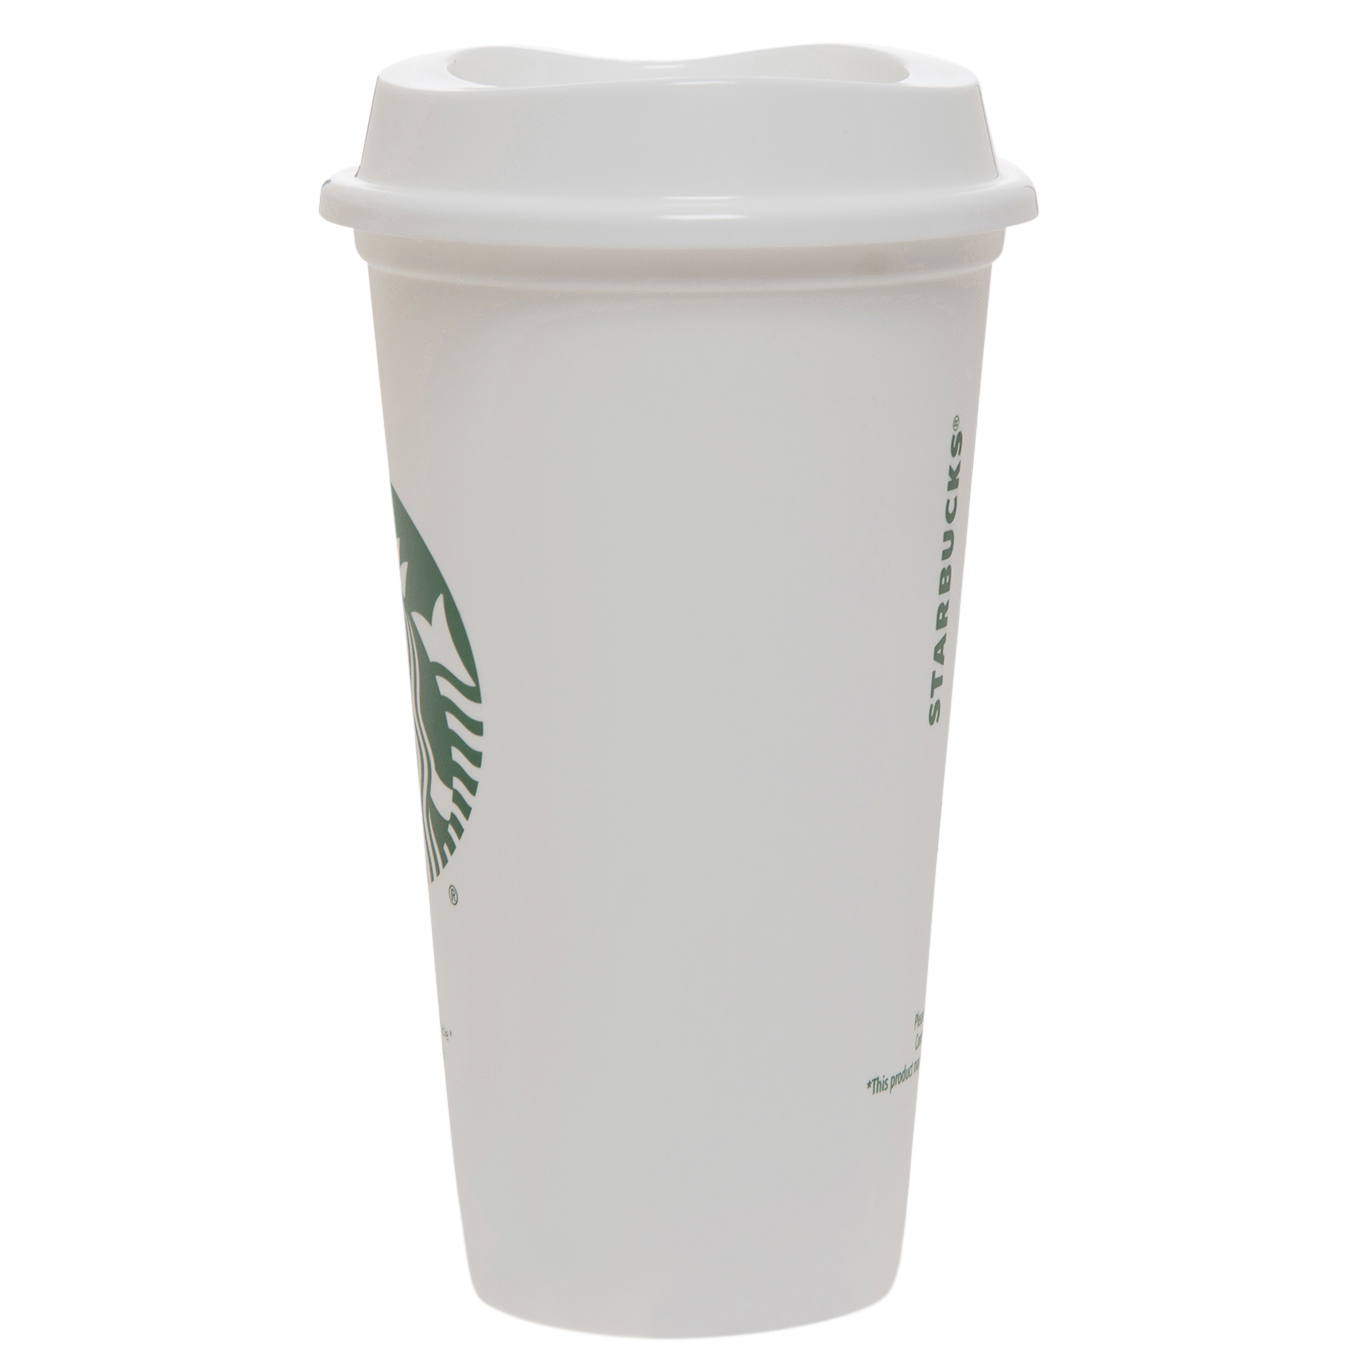 Starbucks 16oz Reusable Cups 5-Pack White - image 5 of 7